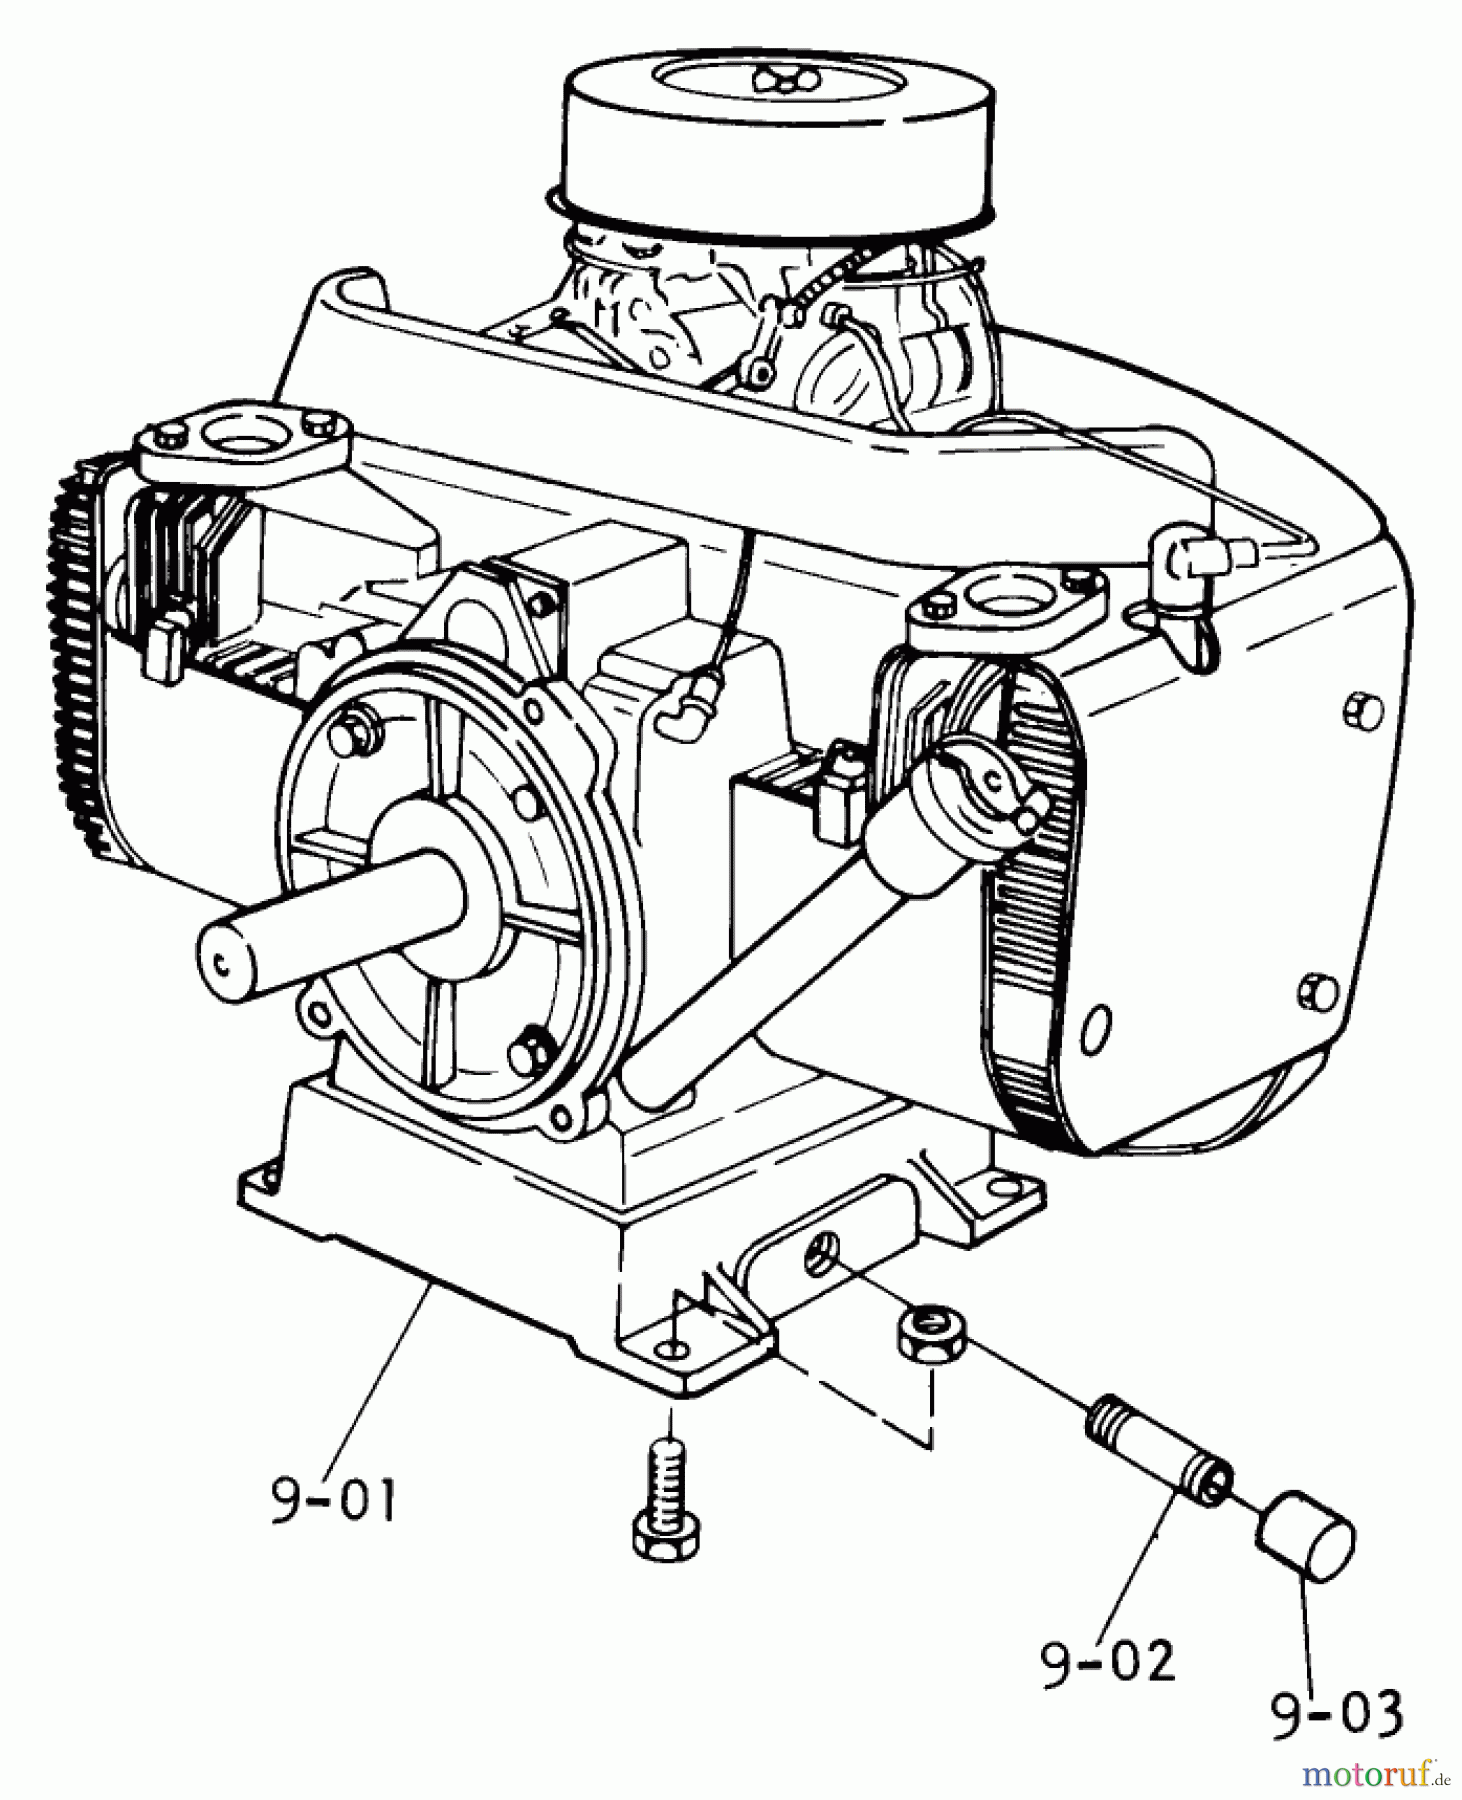  Toro Neu Mowers, Lawn & Garden Tractor Seite 1 1-0600 - Toro 18 hp AutomaticTractor, 1973 ENGINE